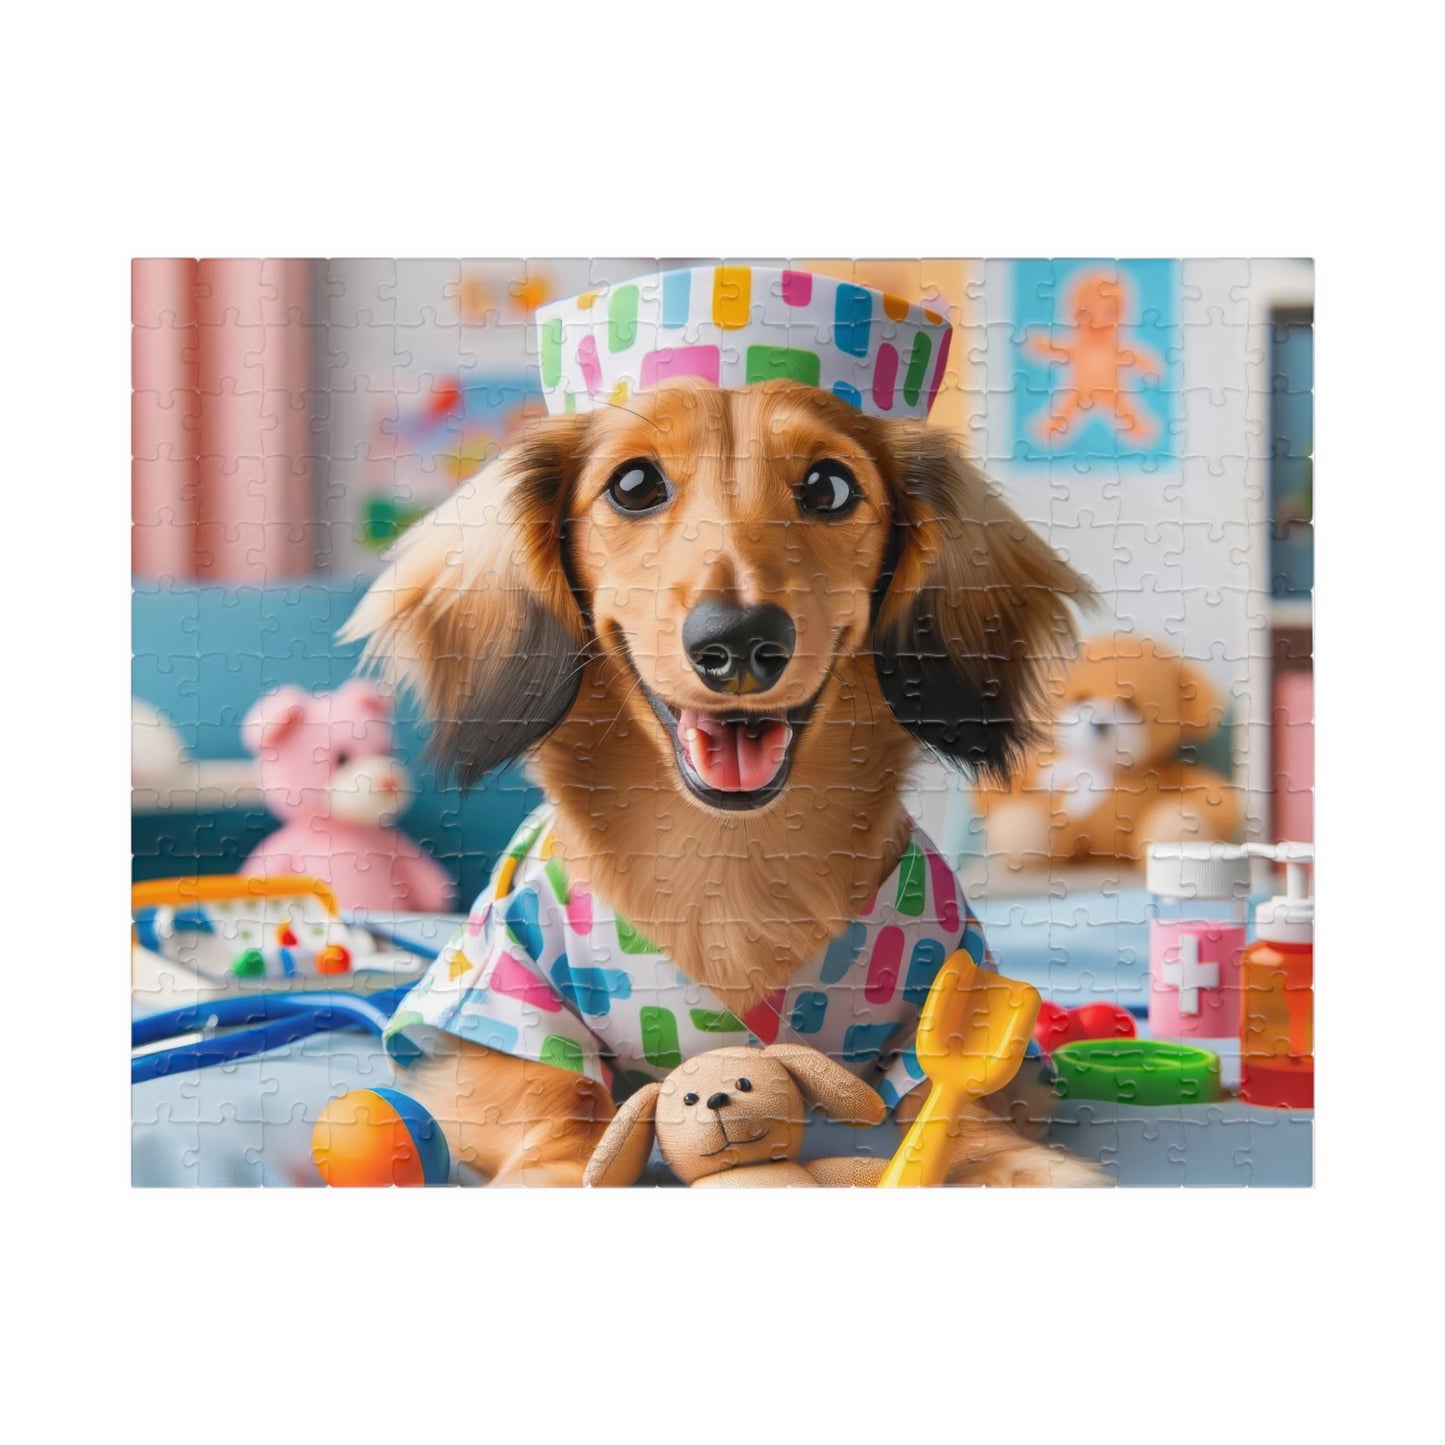 Playful Dachshund Nurse Puzzle - Colorful Jigsaw, Family Bonding Activity, Glossy Finish, Educational Dog Game, 110, 252, 520, 1014-pieces